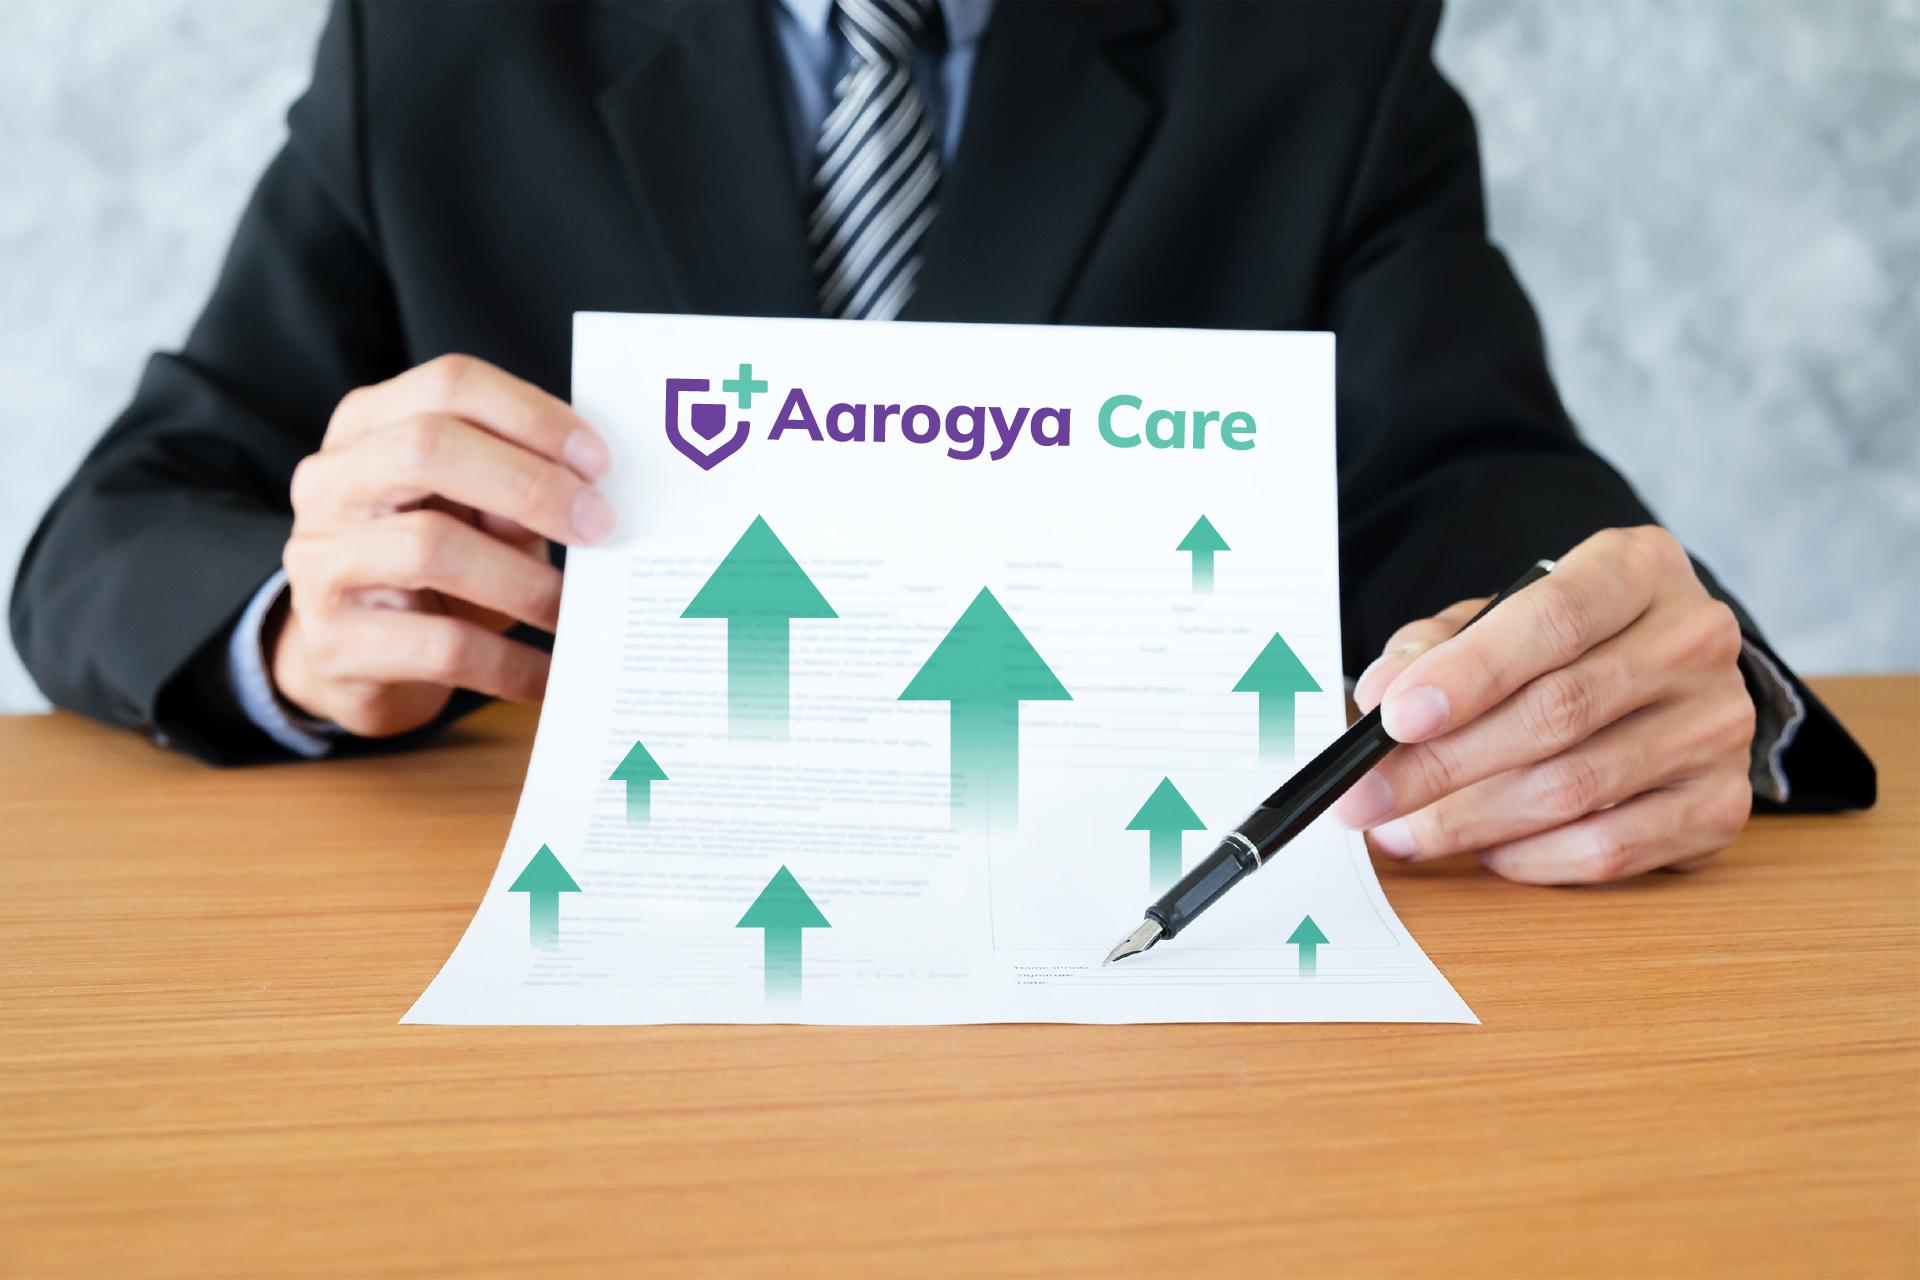 18 Aarogya Care Benefits that Enhance Your Health Insurance